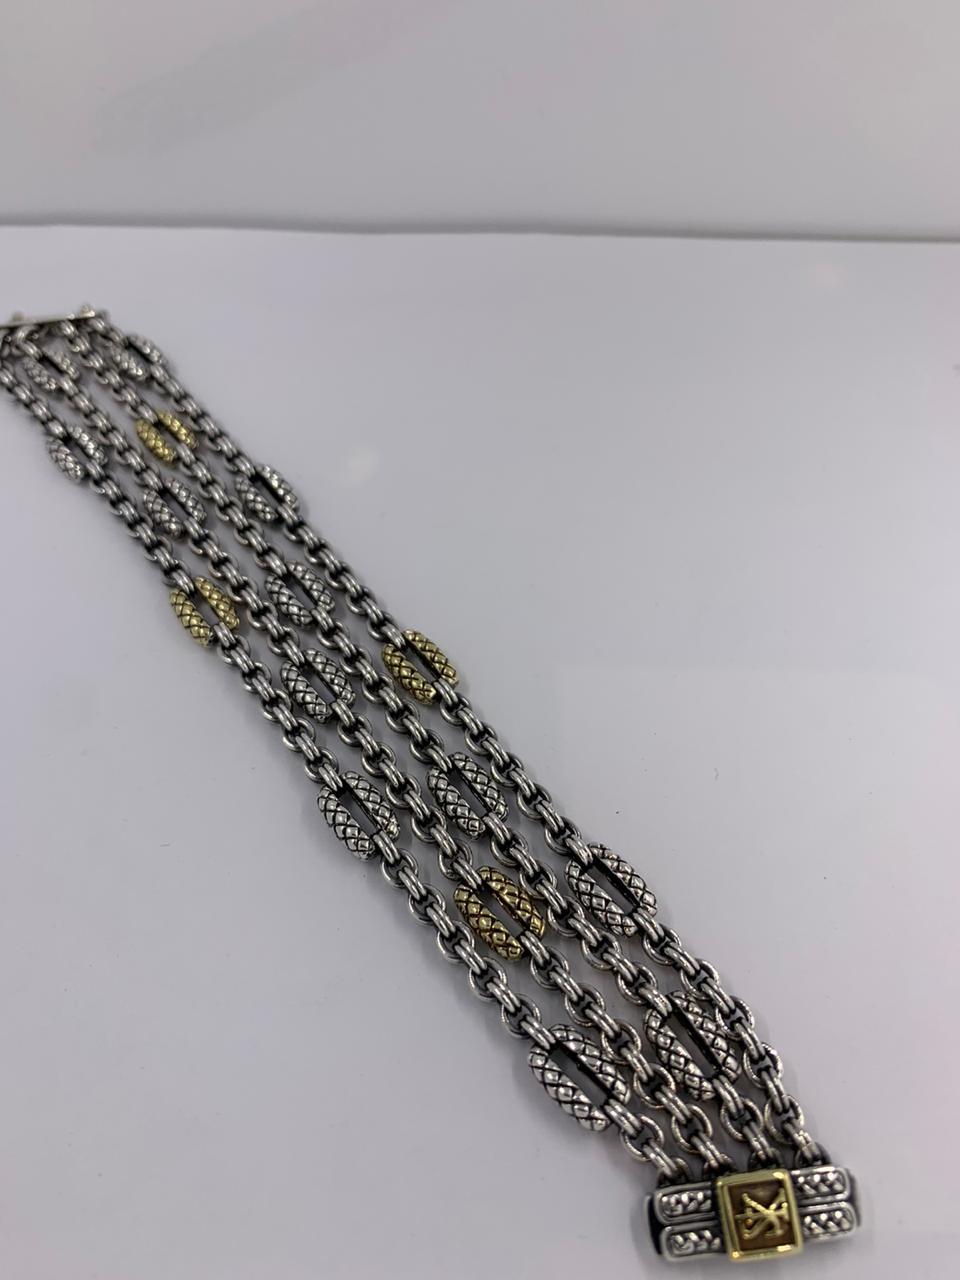 Scott Kay Silver and Gold Bracelet
4 row silver and 18kt gold link bracelet
SKS-10003